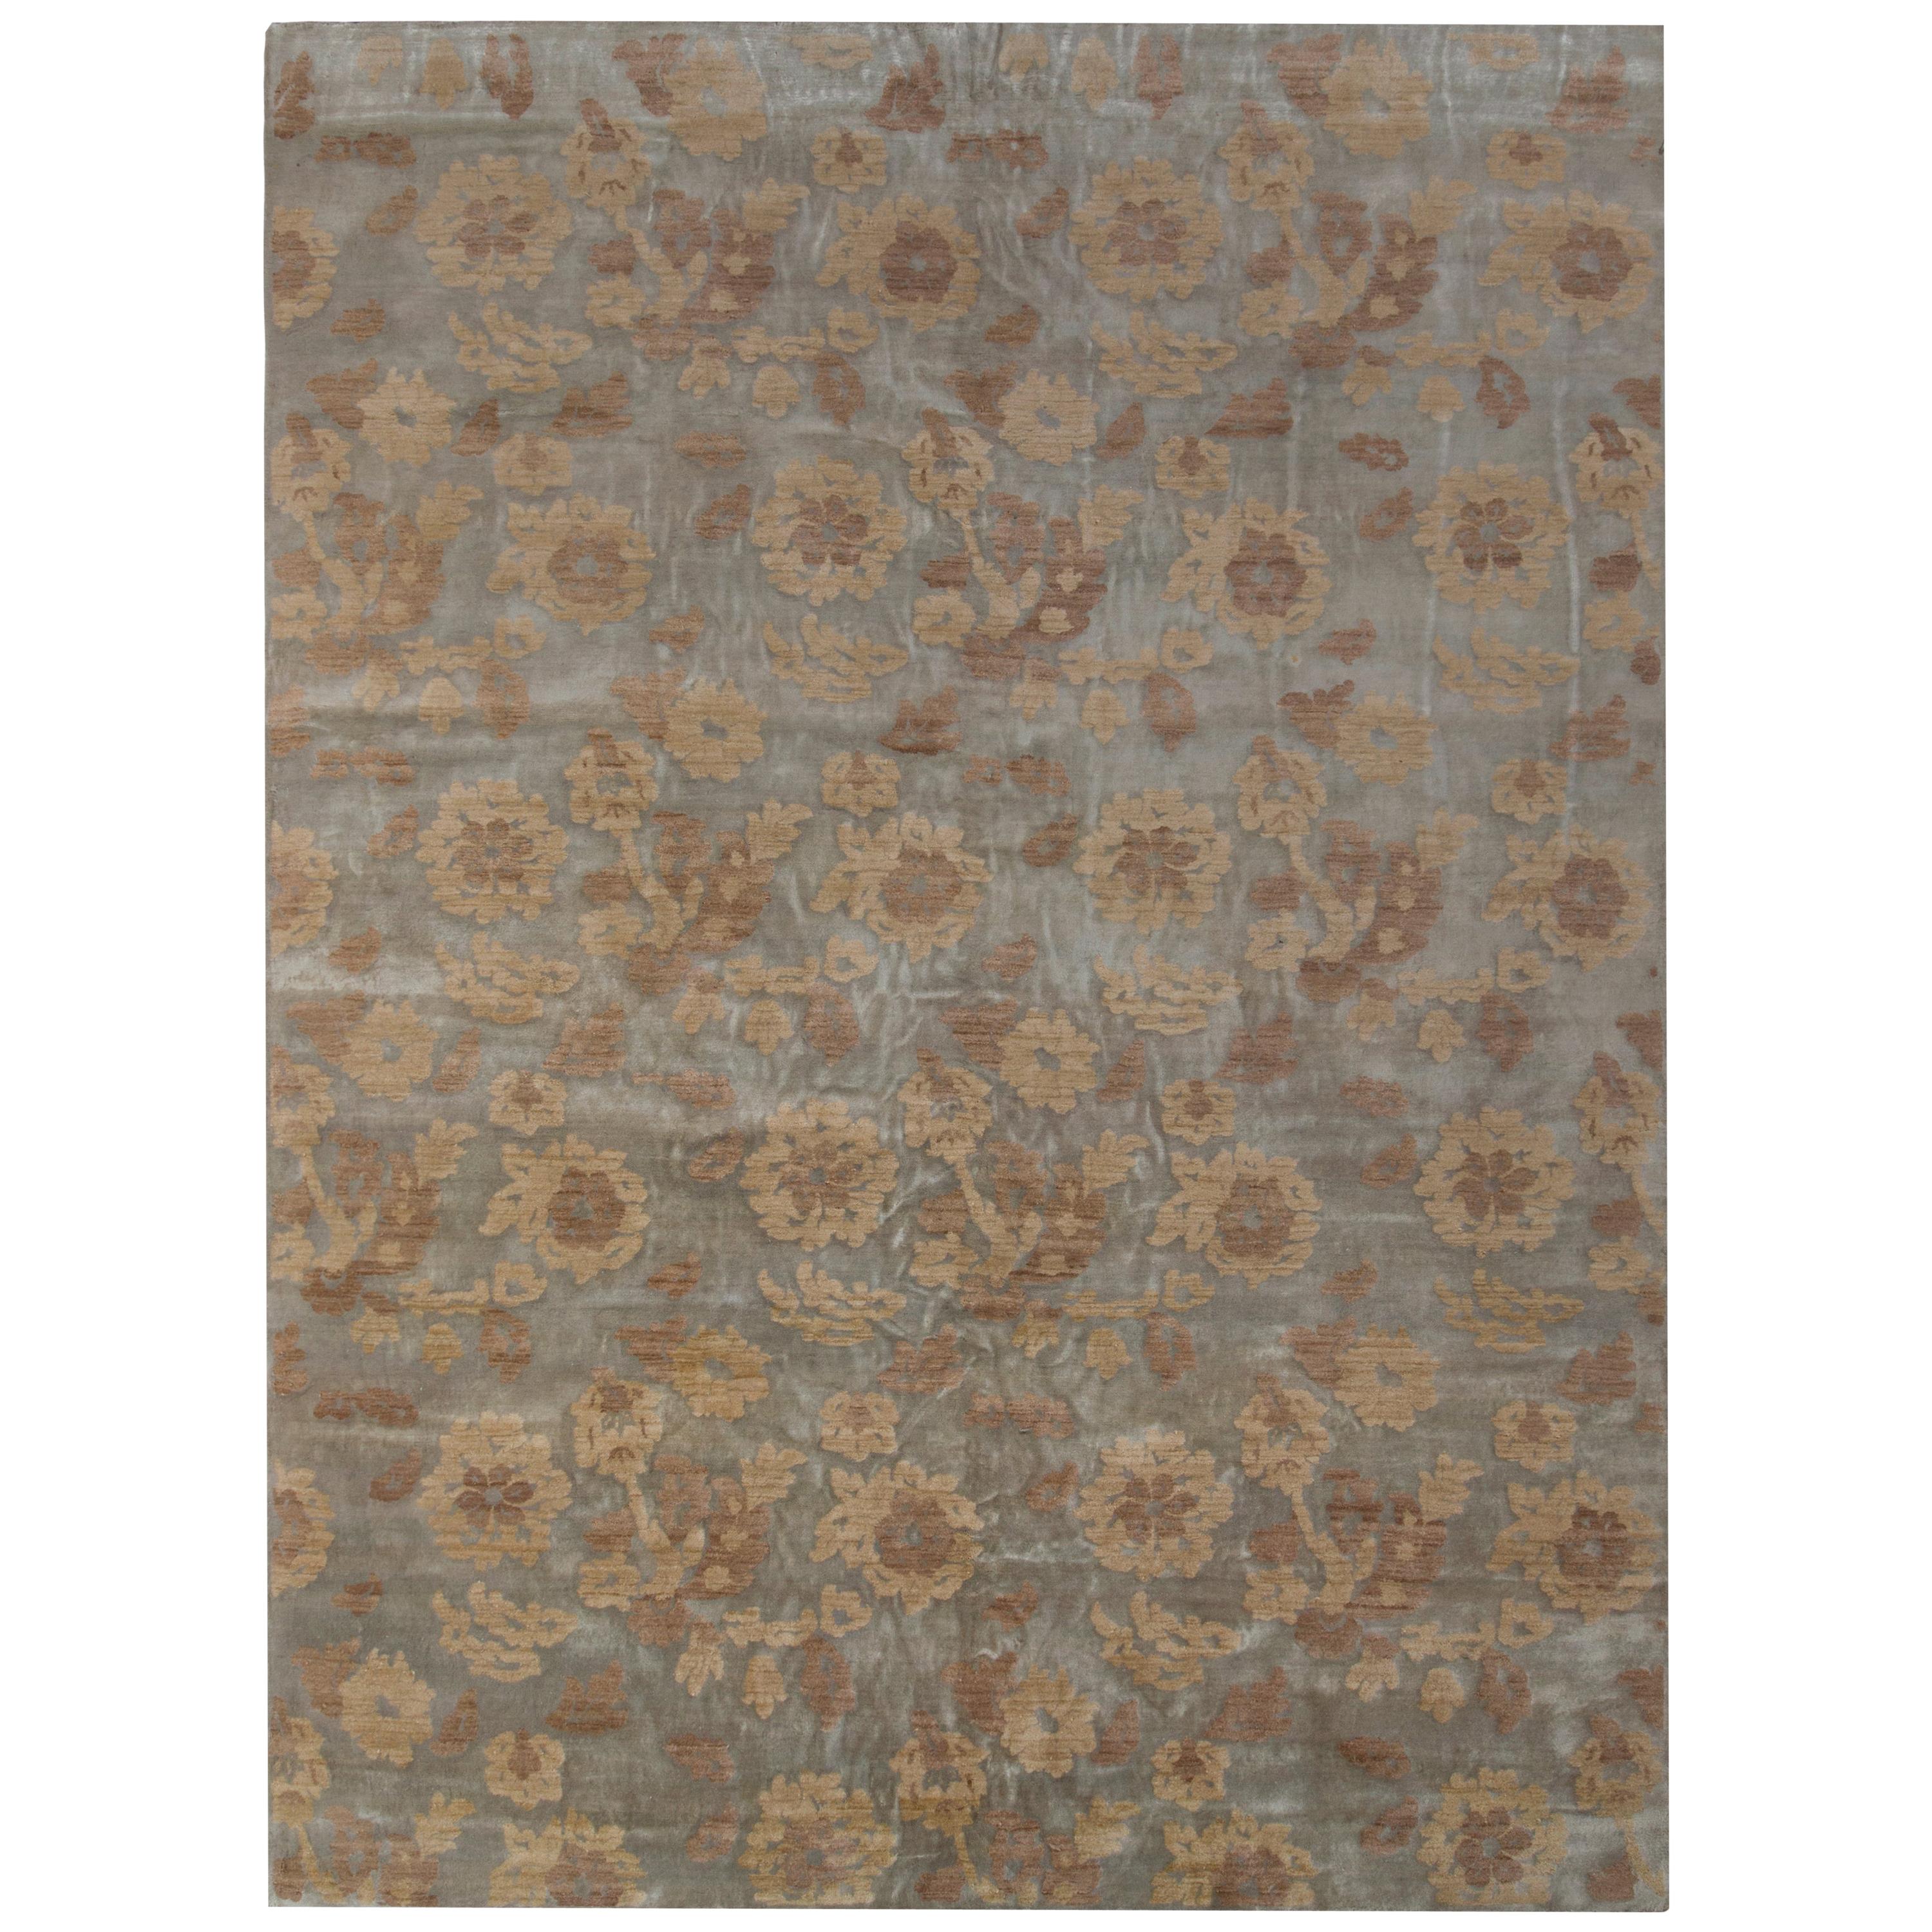 Rug & Kilim’s Handmade Contemporary Rug in Beige Brown Floral Pattern